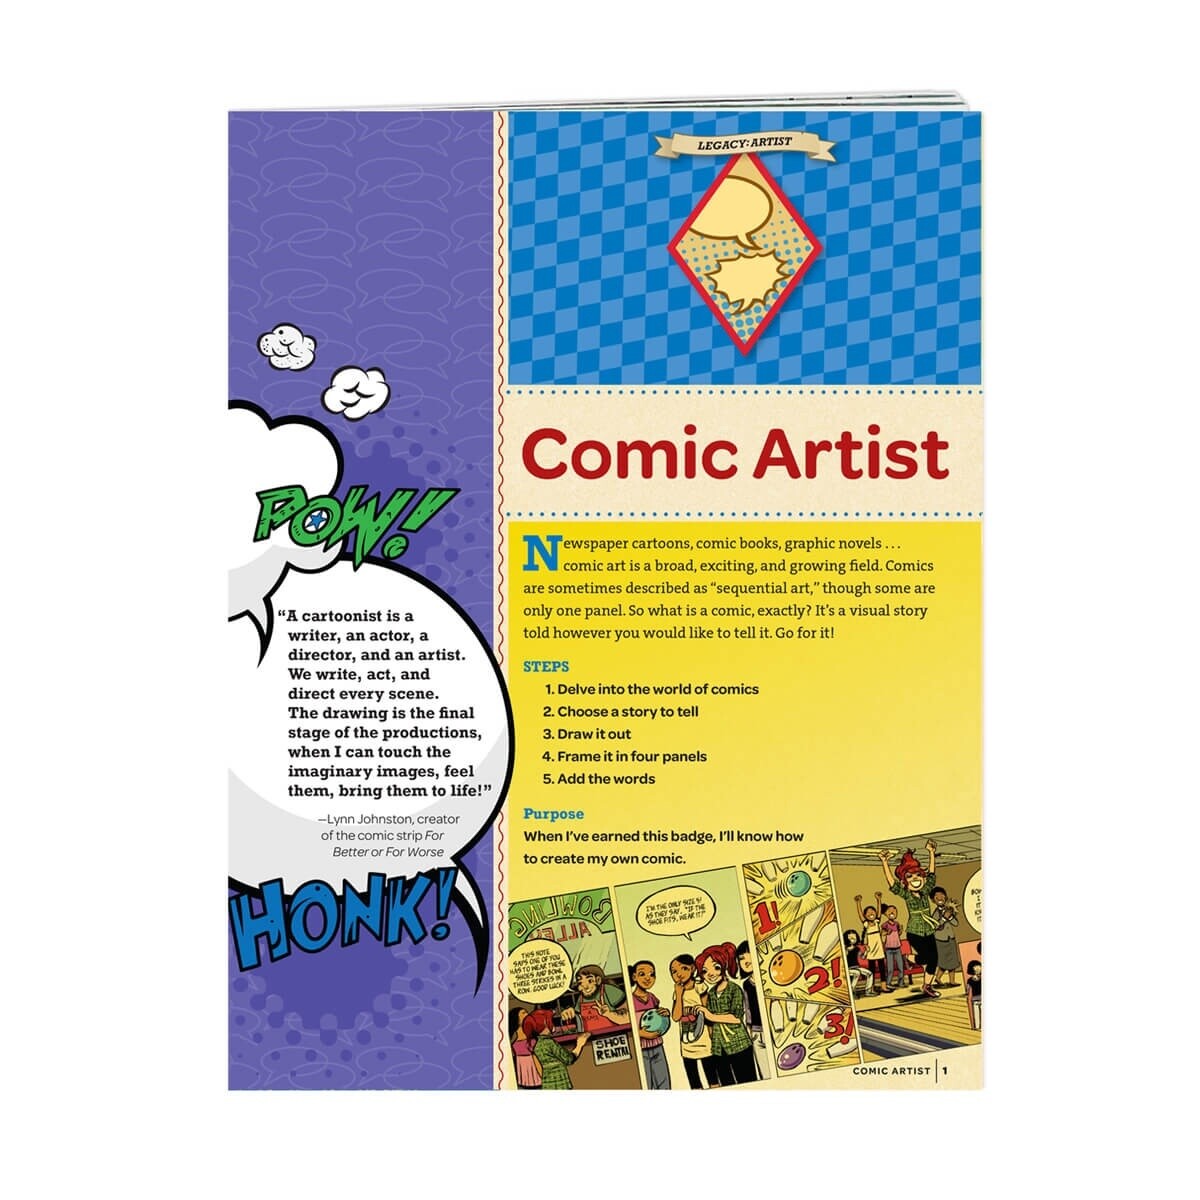 Cadette Comic Artist Badge Requirements